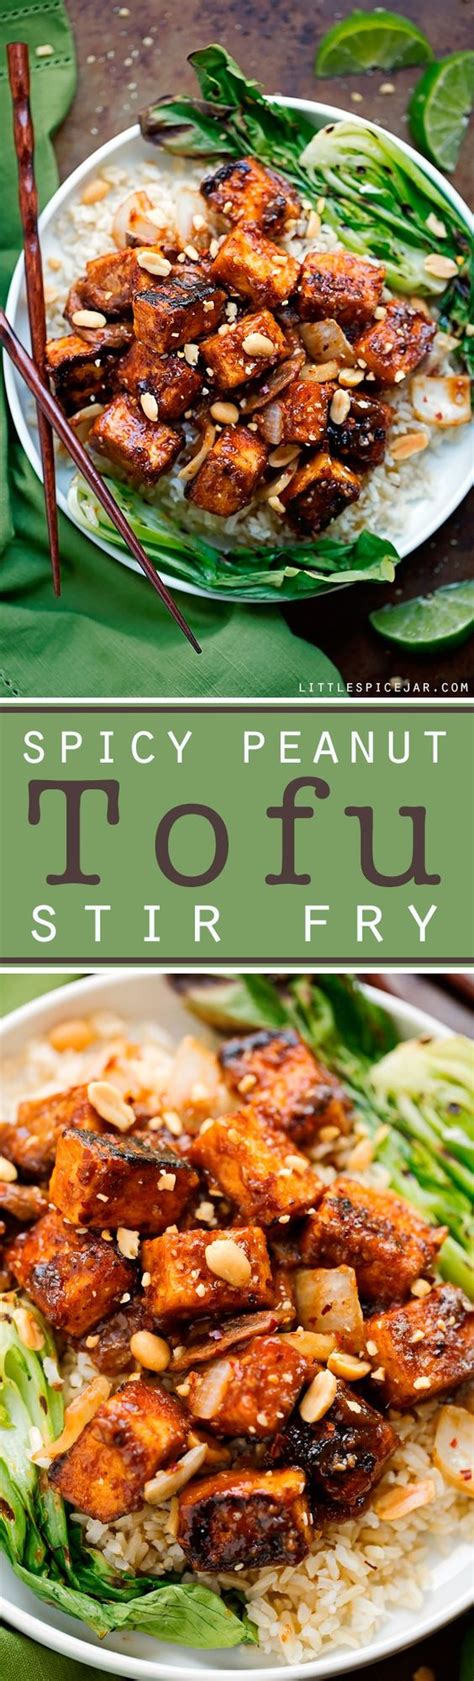 Spicy Peanut Tofu Stir Fry Recipe Jars Stir Fry And Spicy